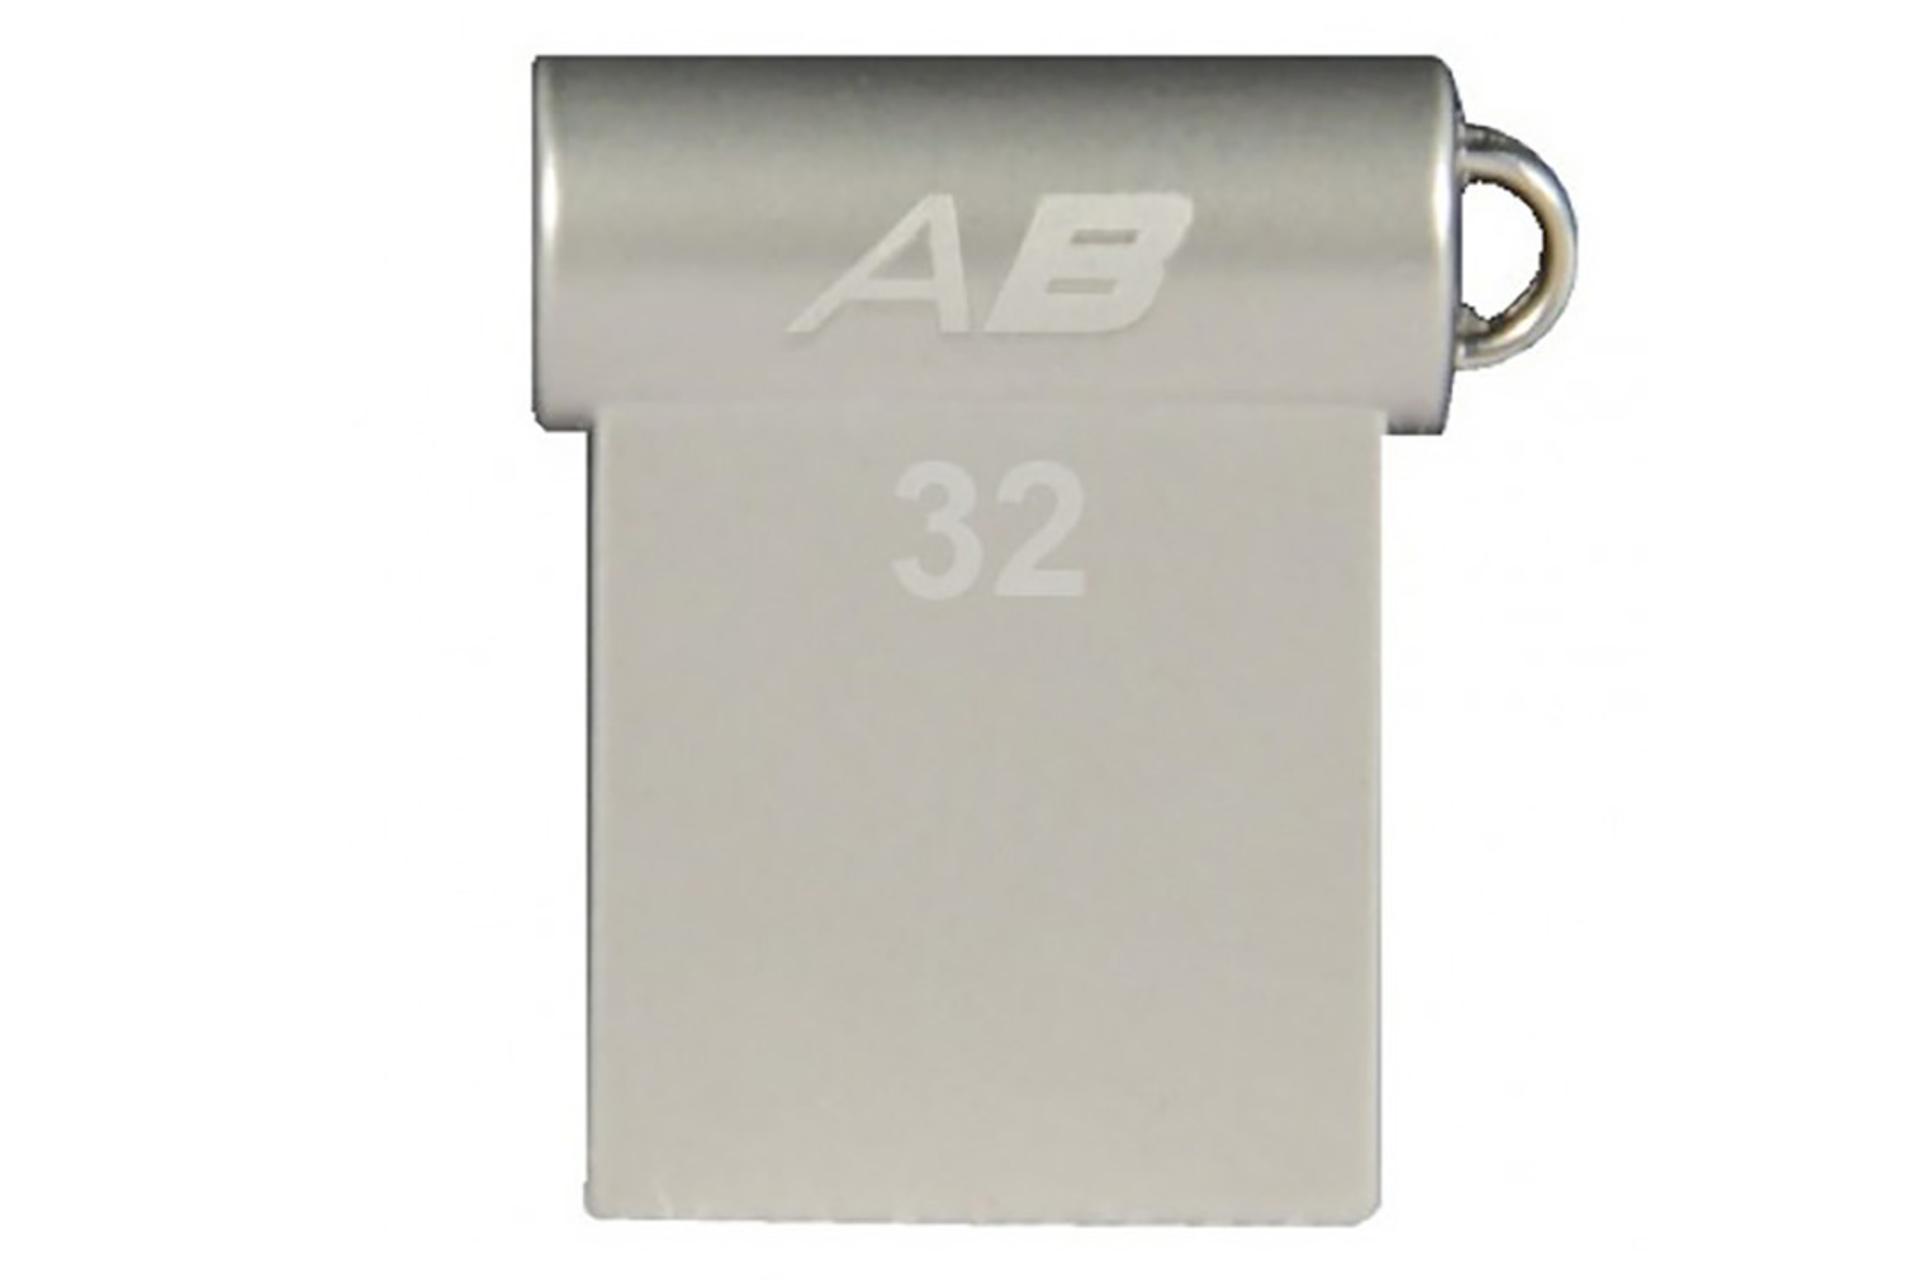 Patriot Autobahn 32GB USB 2.0 32GB